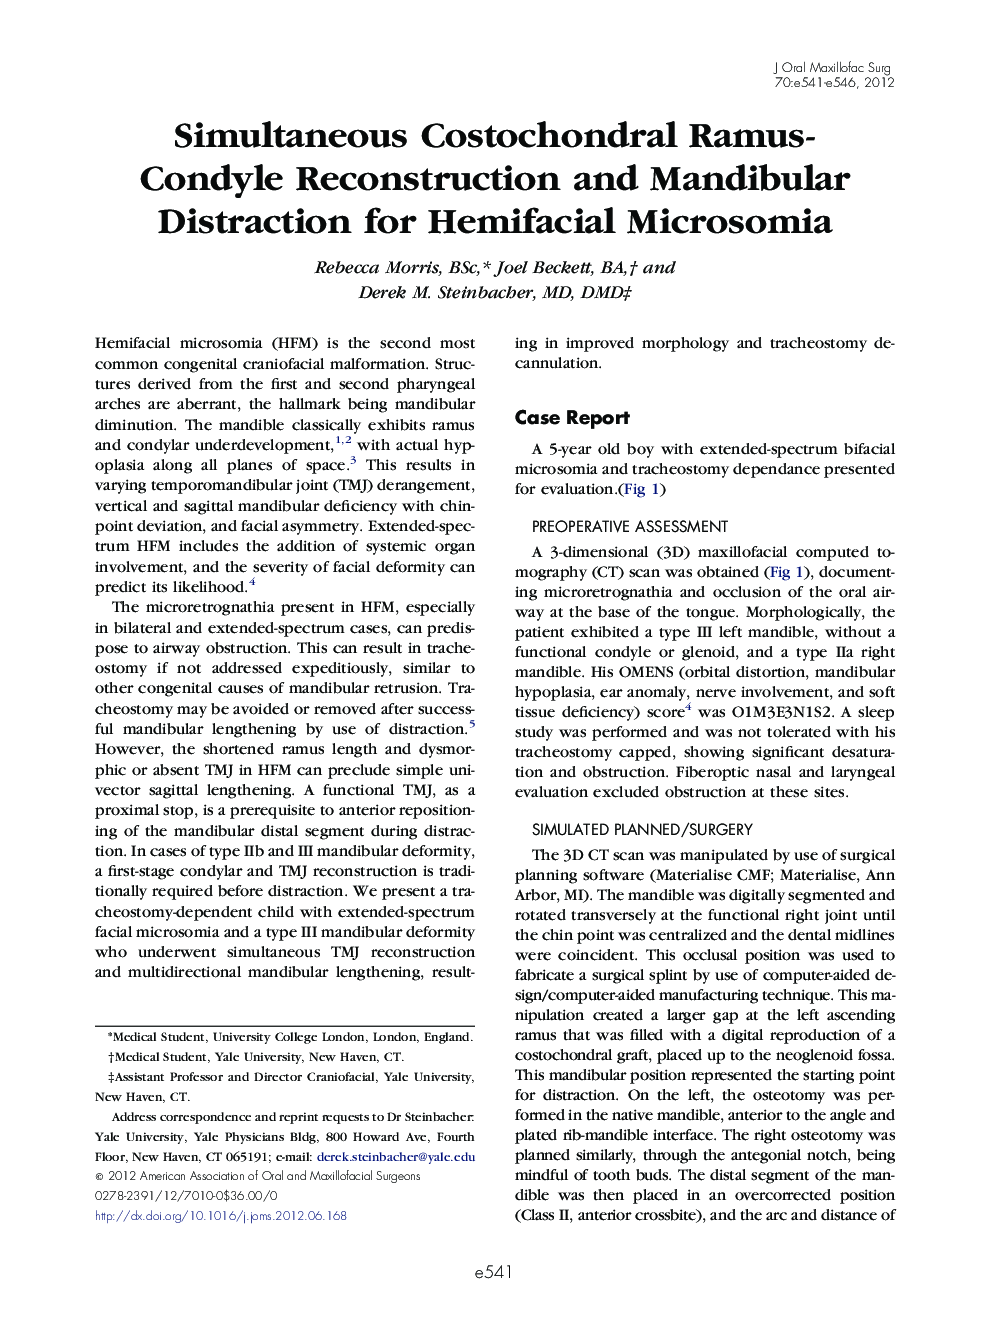 Simultaneous Costochondral Ramus-Condyle Reconstruction and Mandibular Distraction for Hemifacial Microsomia